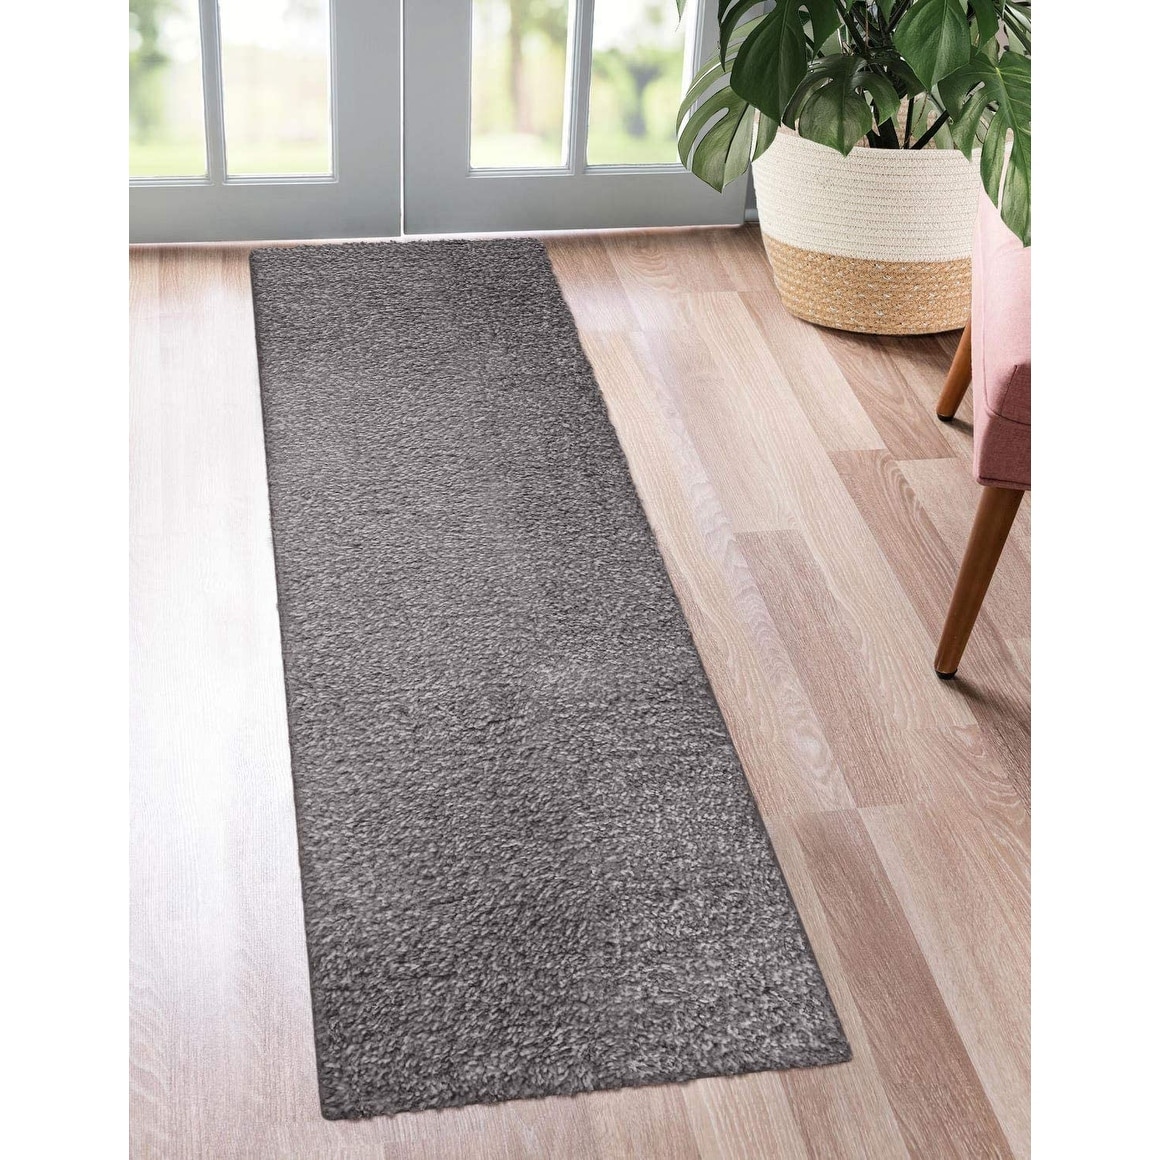 Heavy Duty Non Slip Backing Indoor outdoor Rubber Mat Rug Runner Carpet Washable 